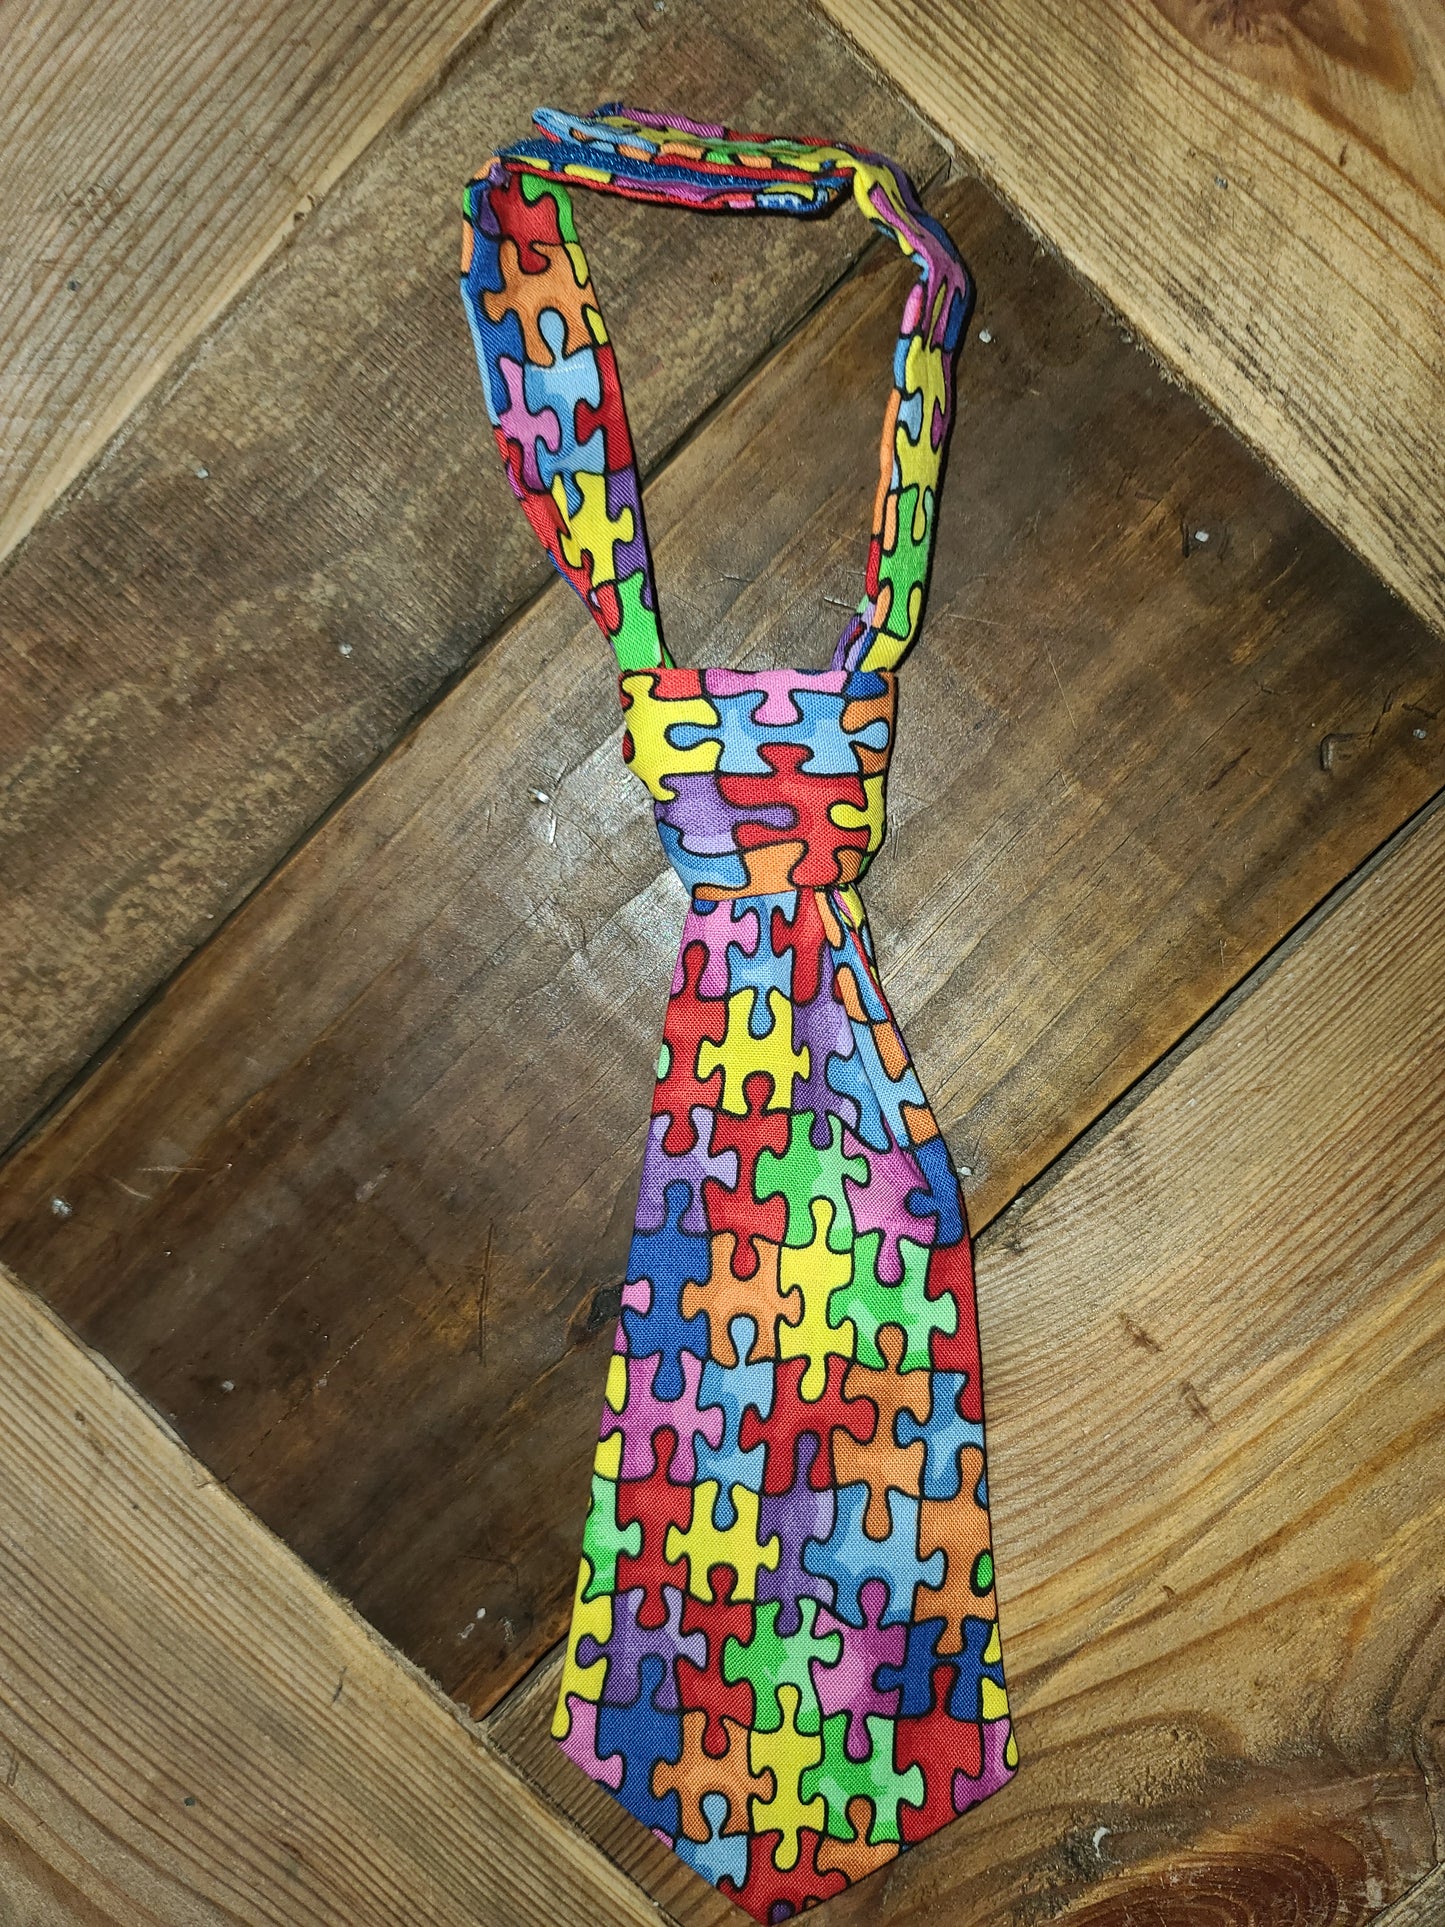 Boys Puzzle Piece Easy off easy on child's tie